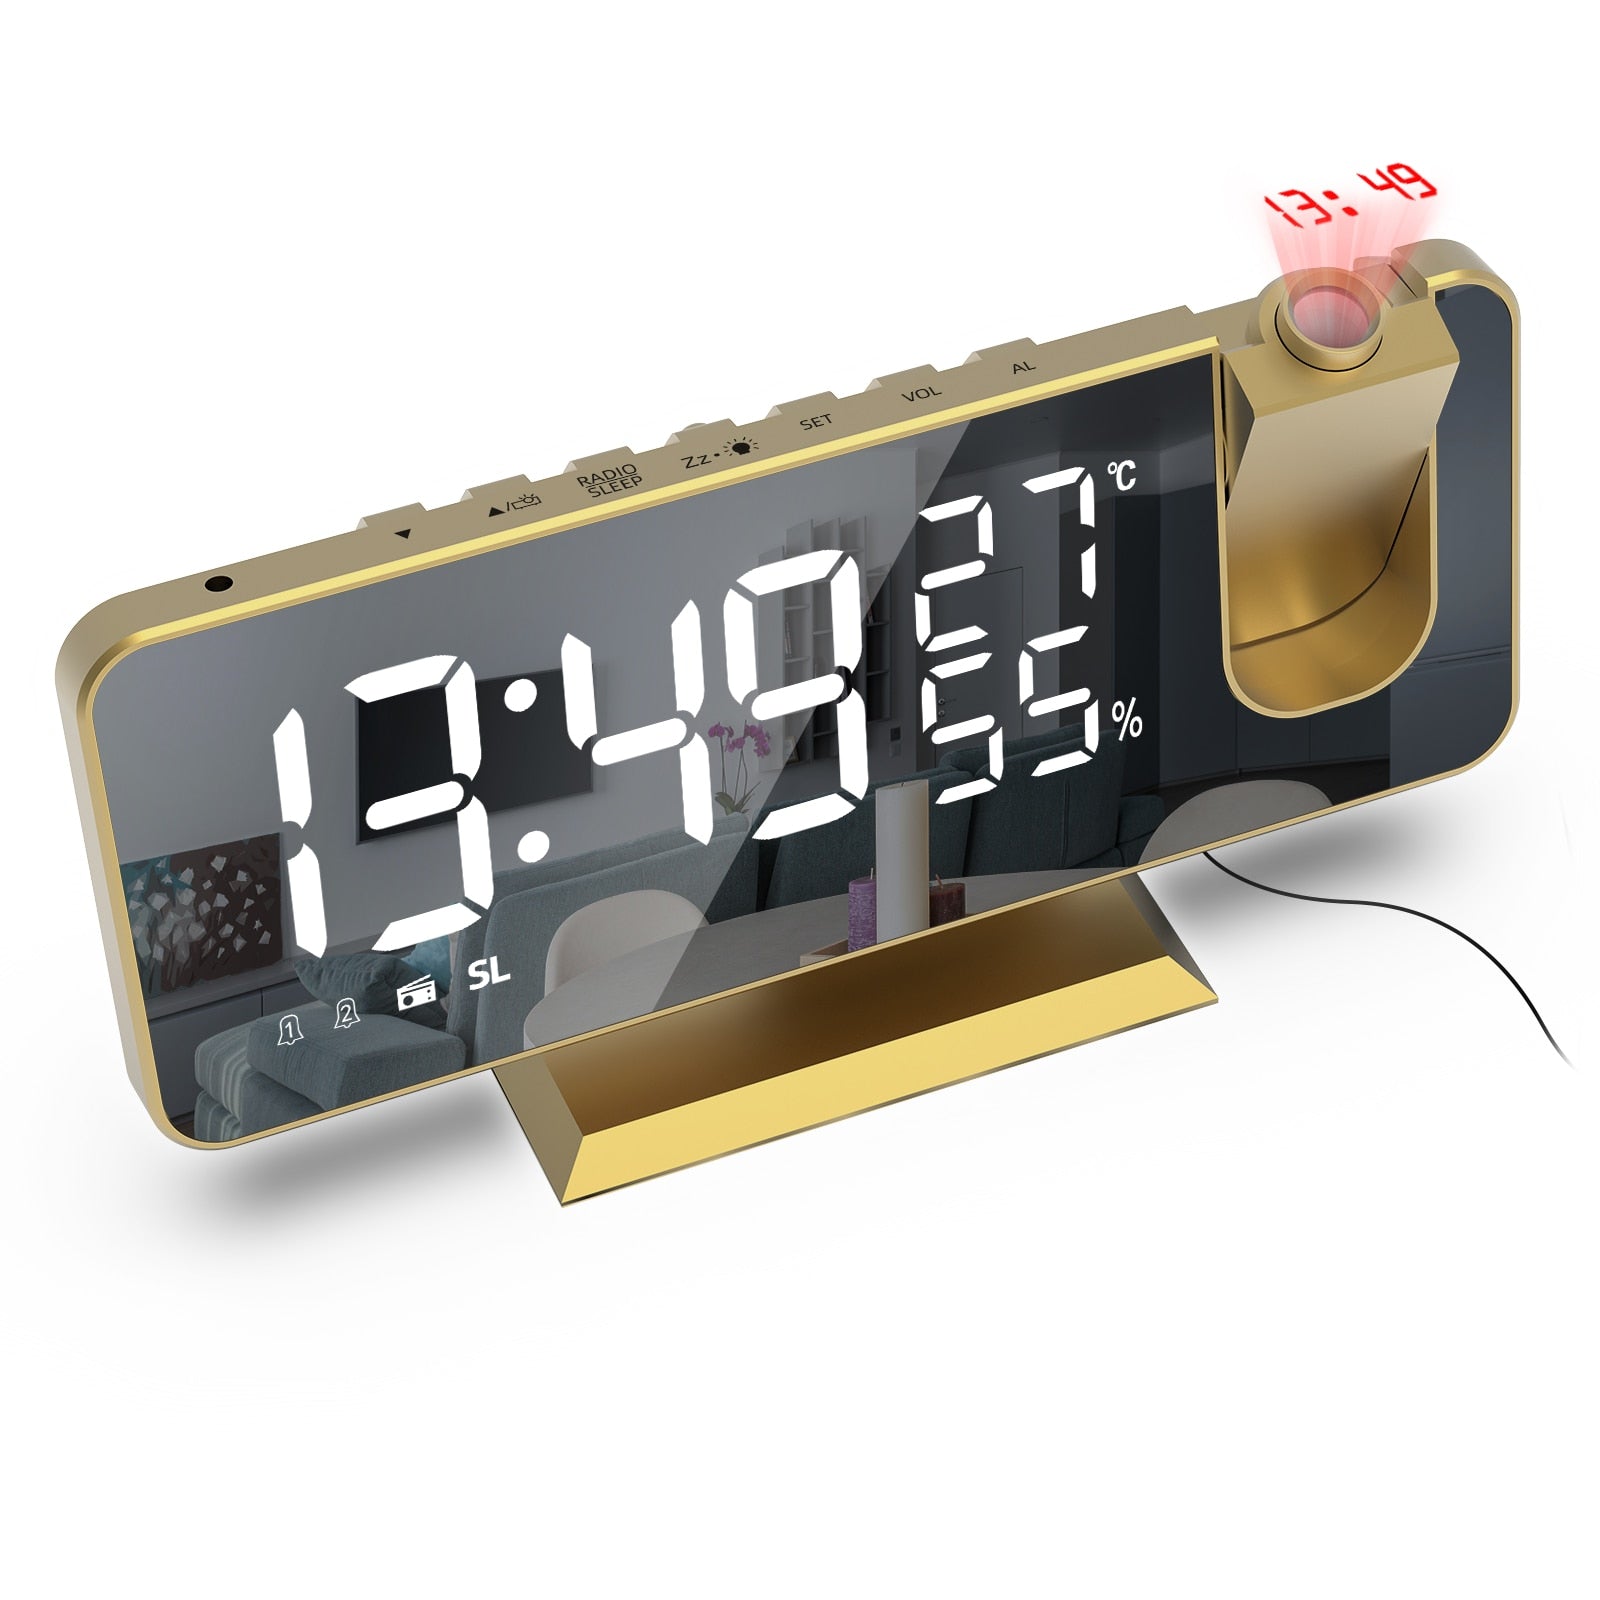 3 Color LED Digital Alarm Clock